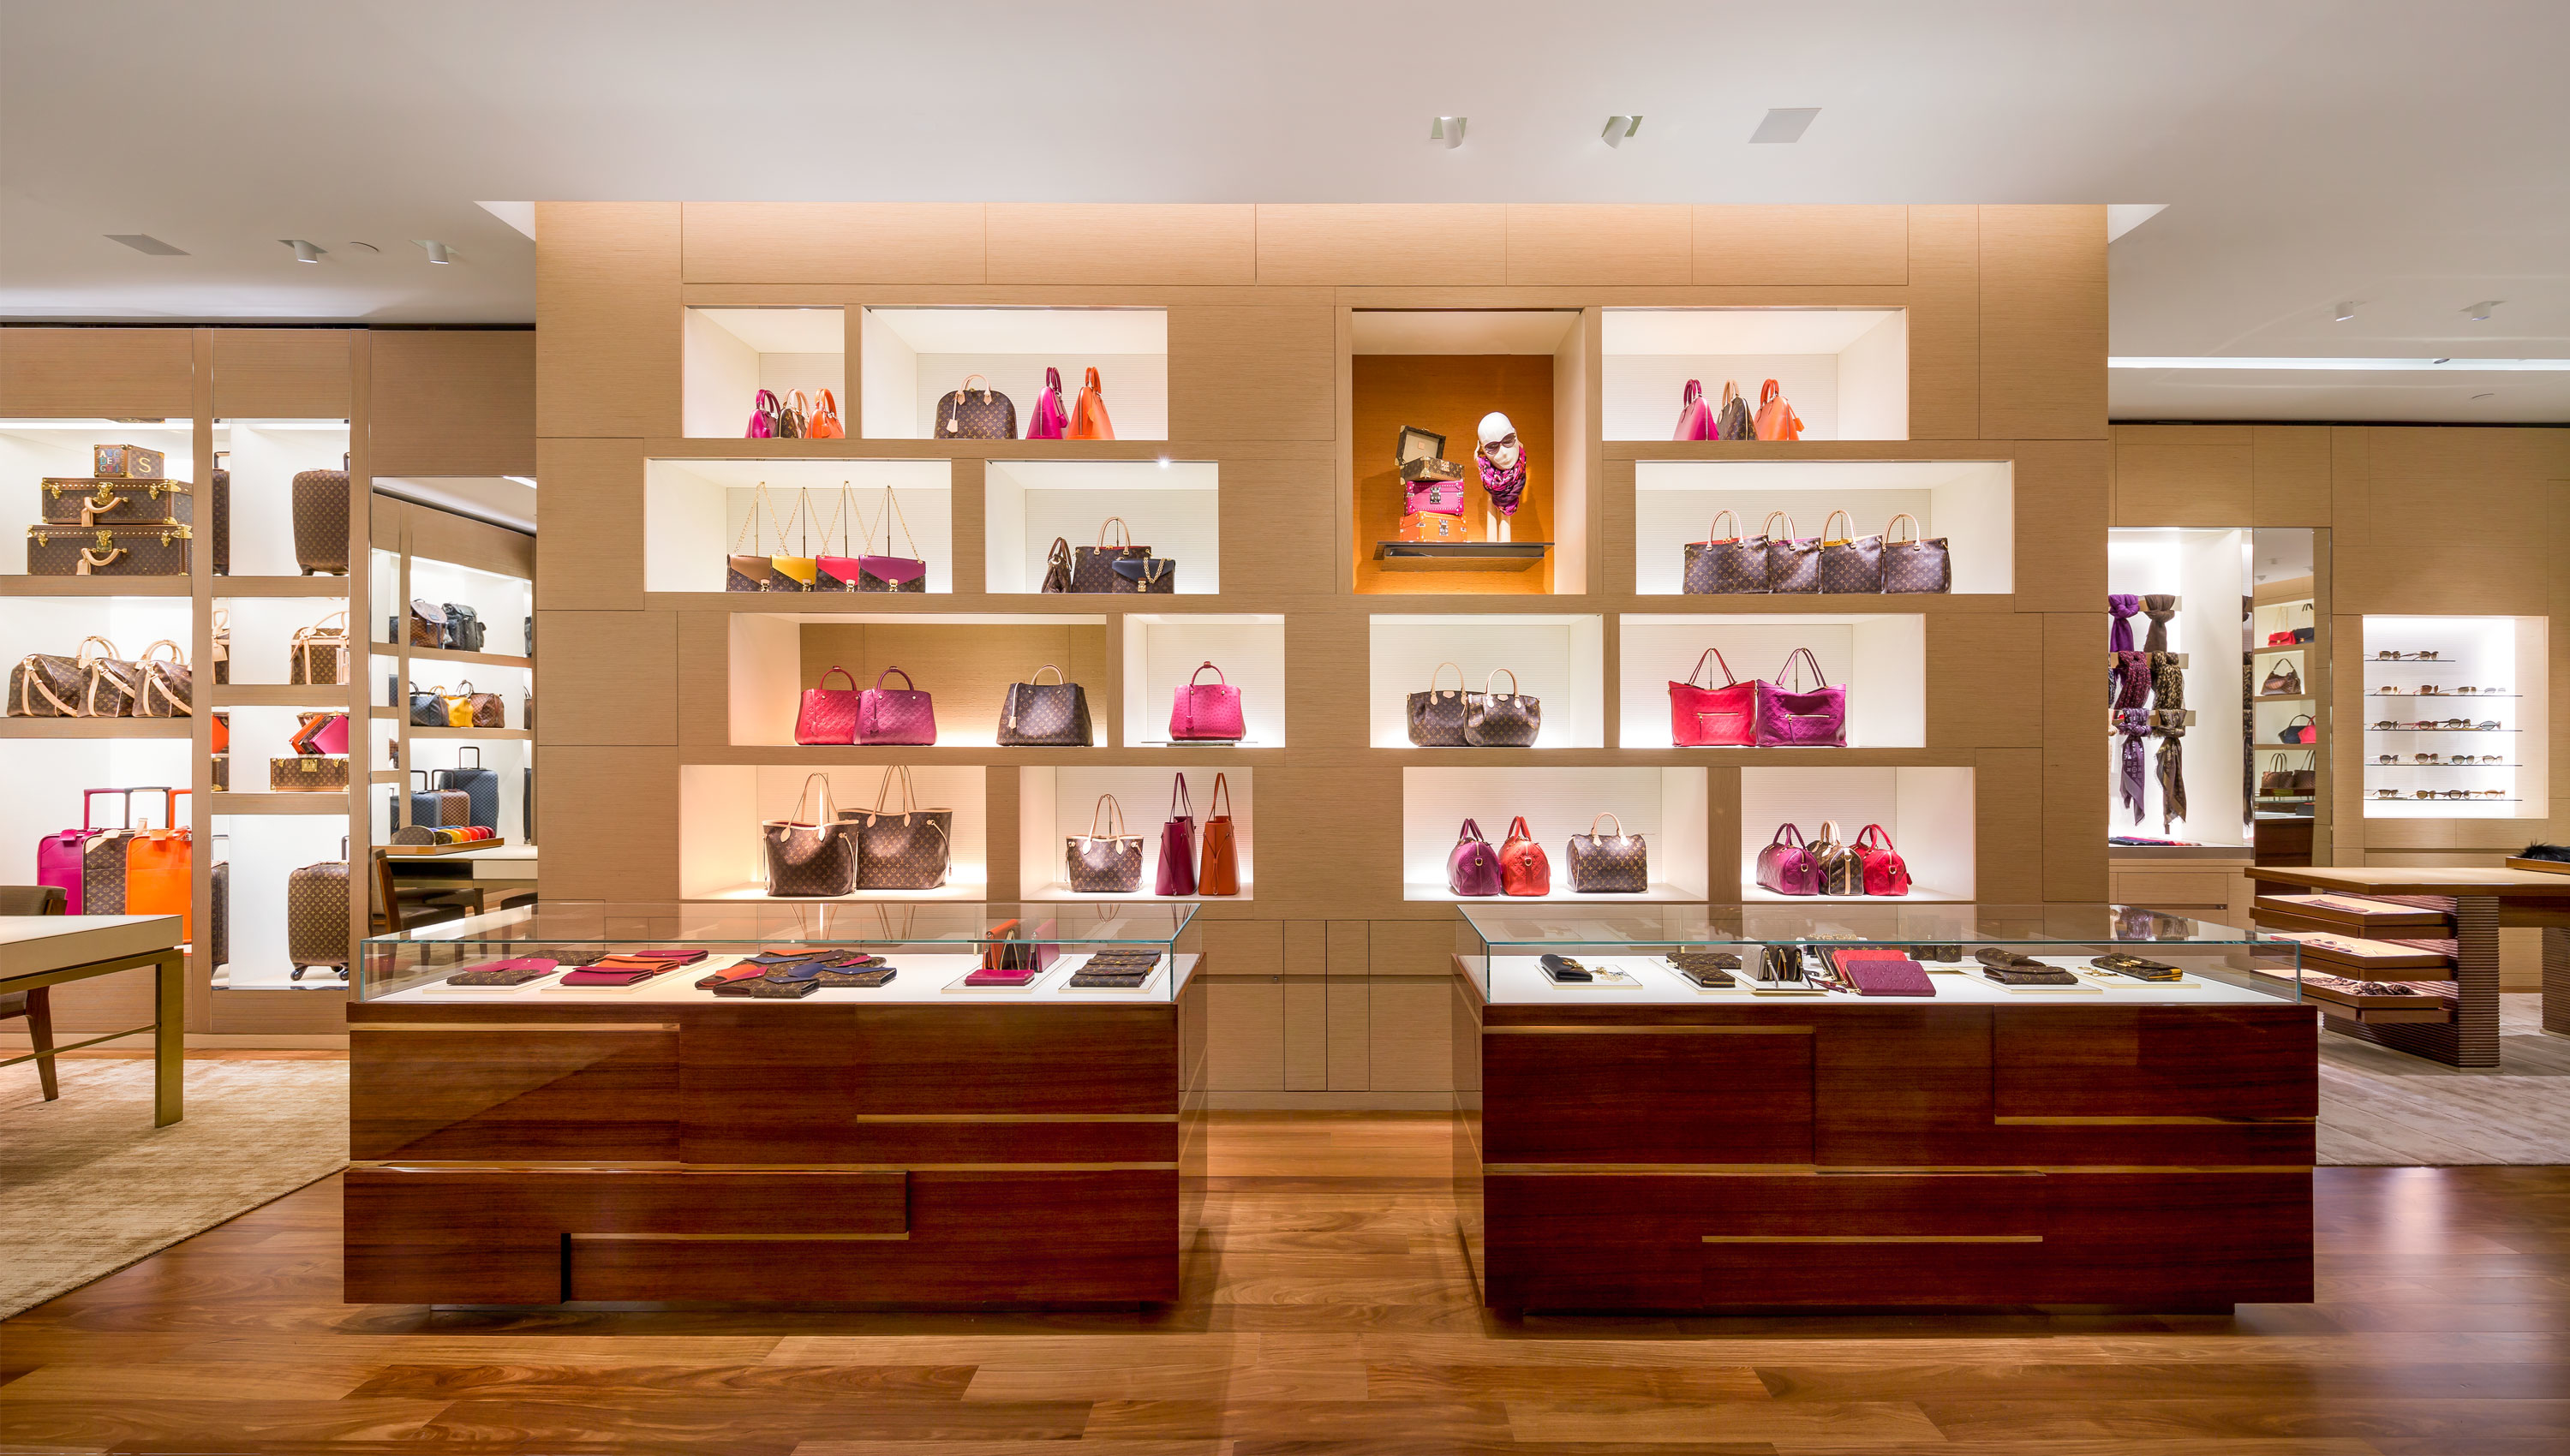 Louis Vuitton, 3440 Peachtree Rd NE, Suite 3014, Atlanta, GA, Clothing  Retail - MapQuest